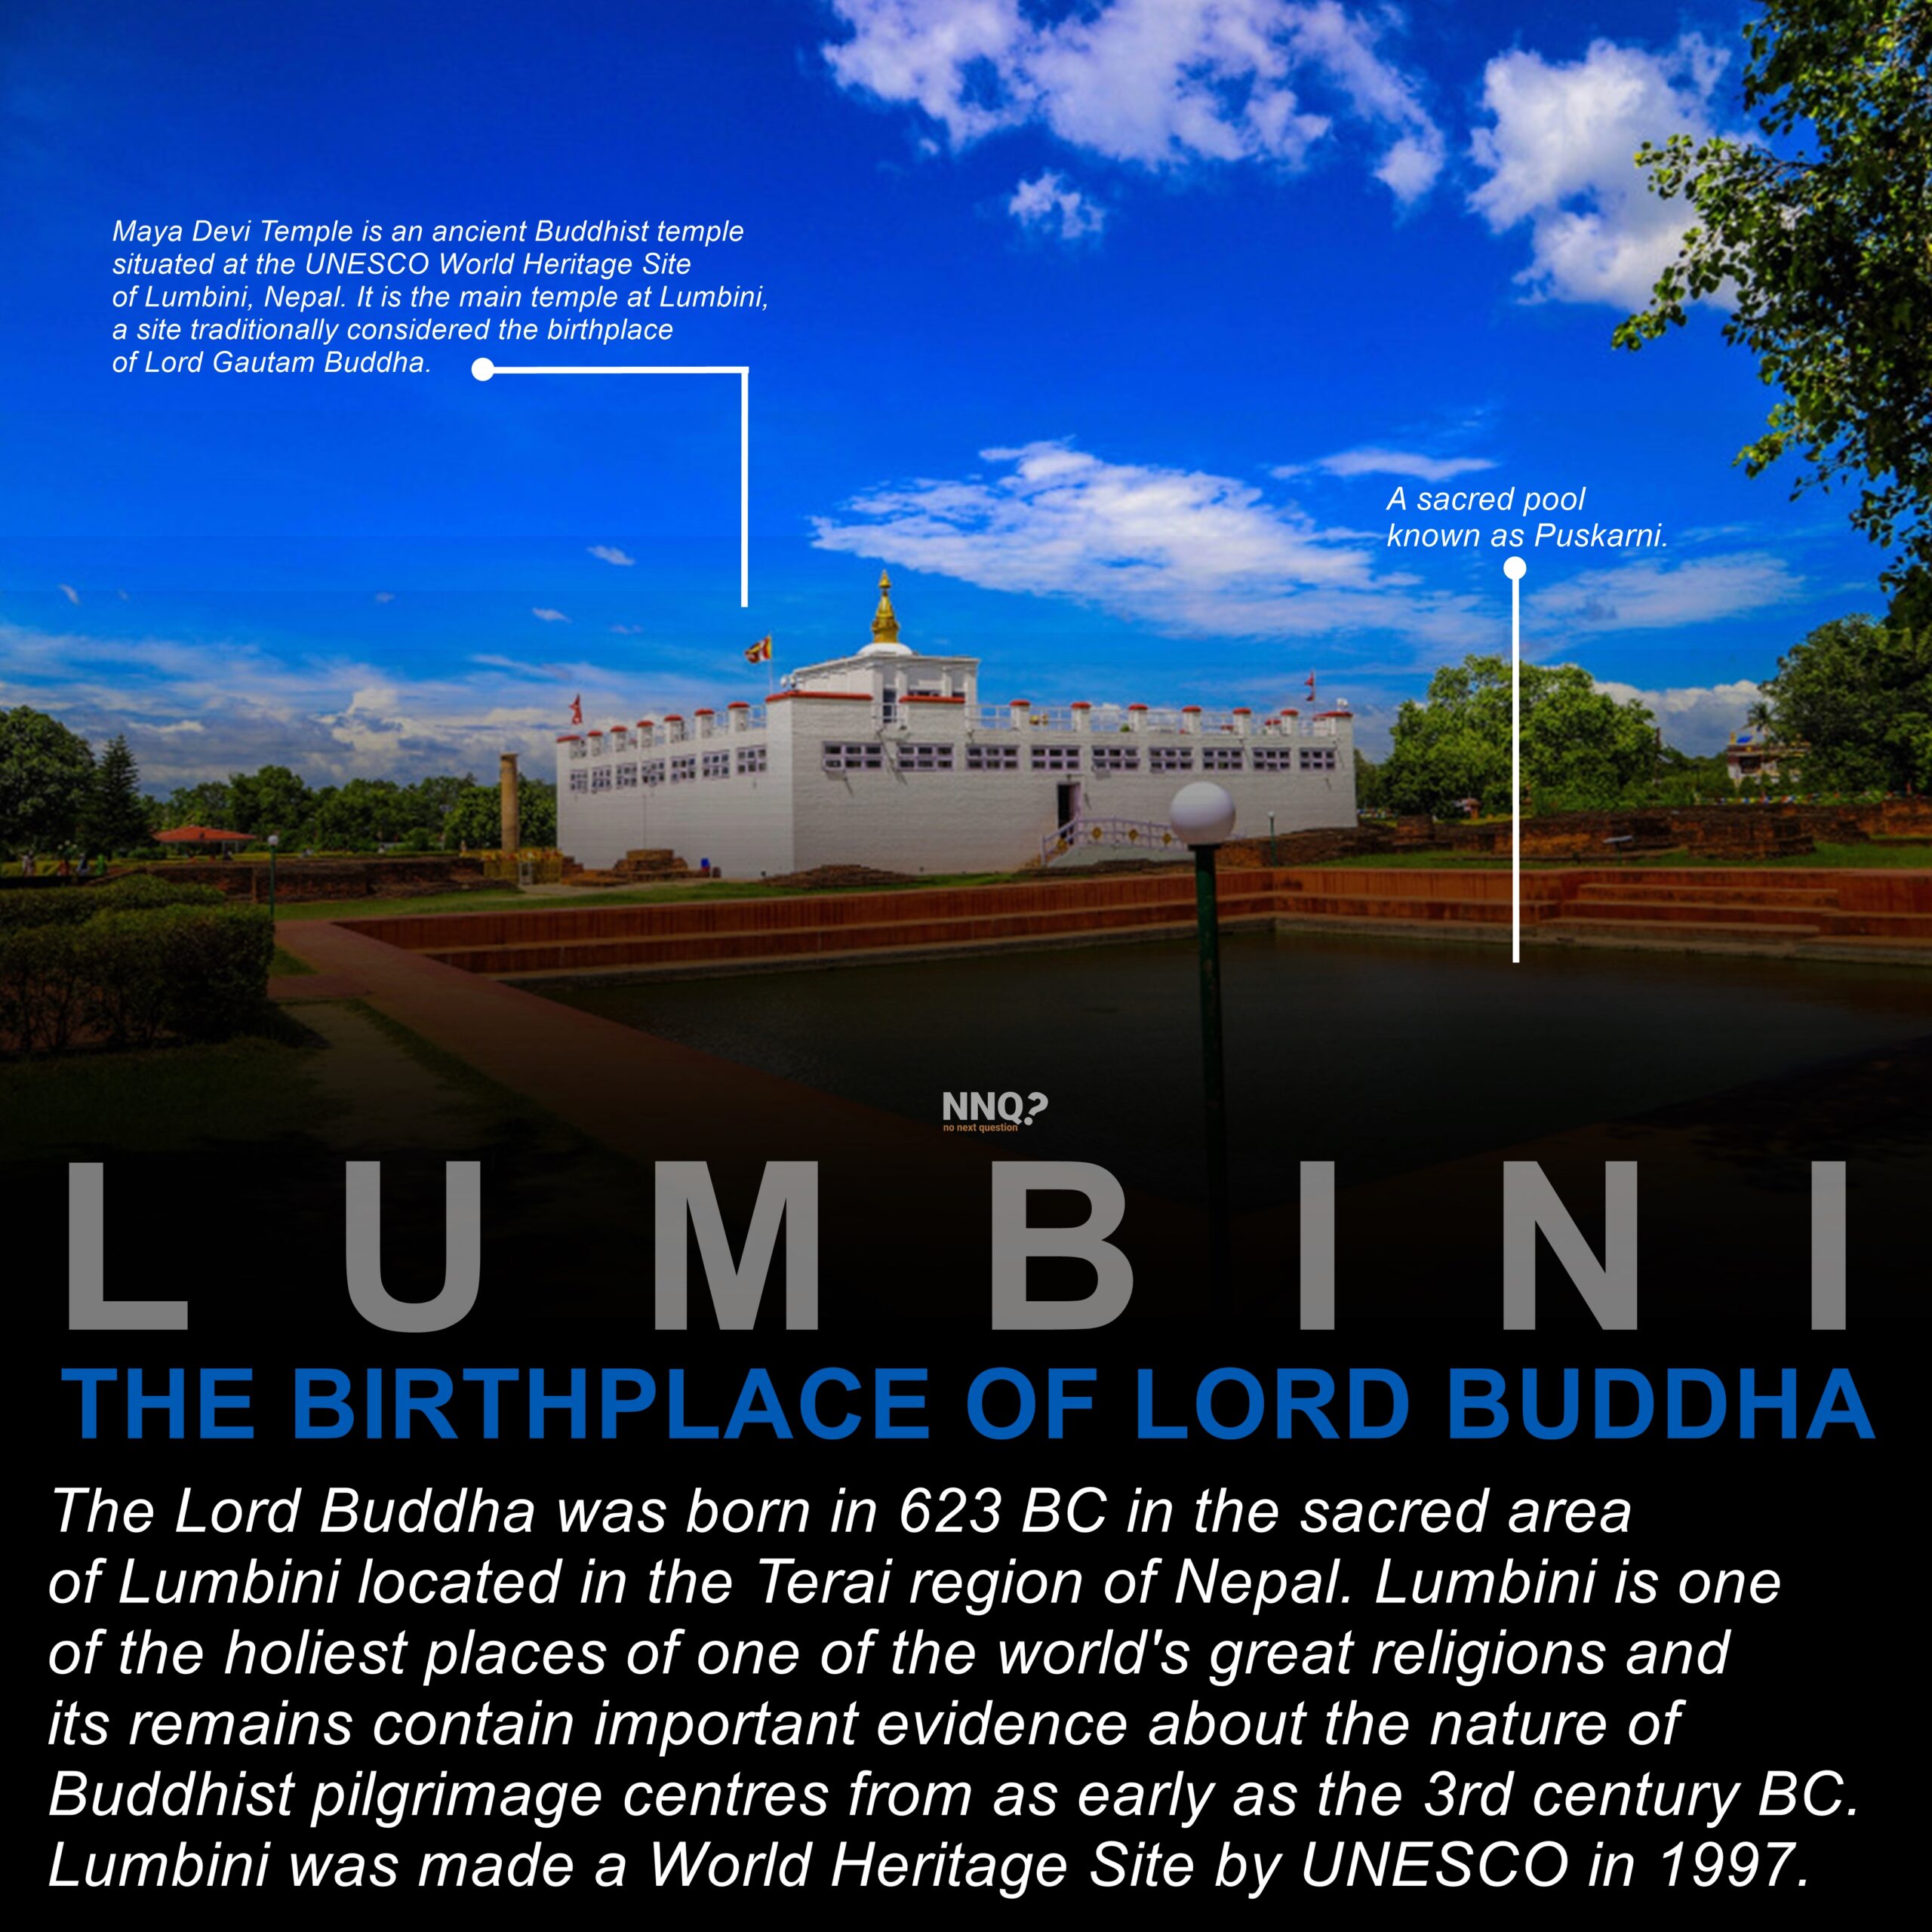 Lumbini: The birthplace of Gautam Buddha